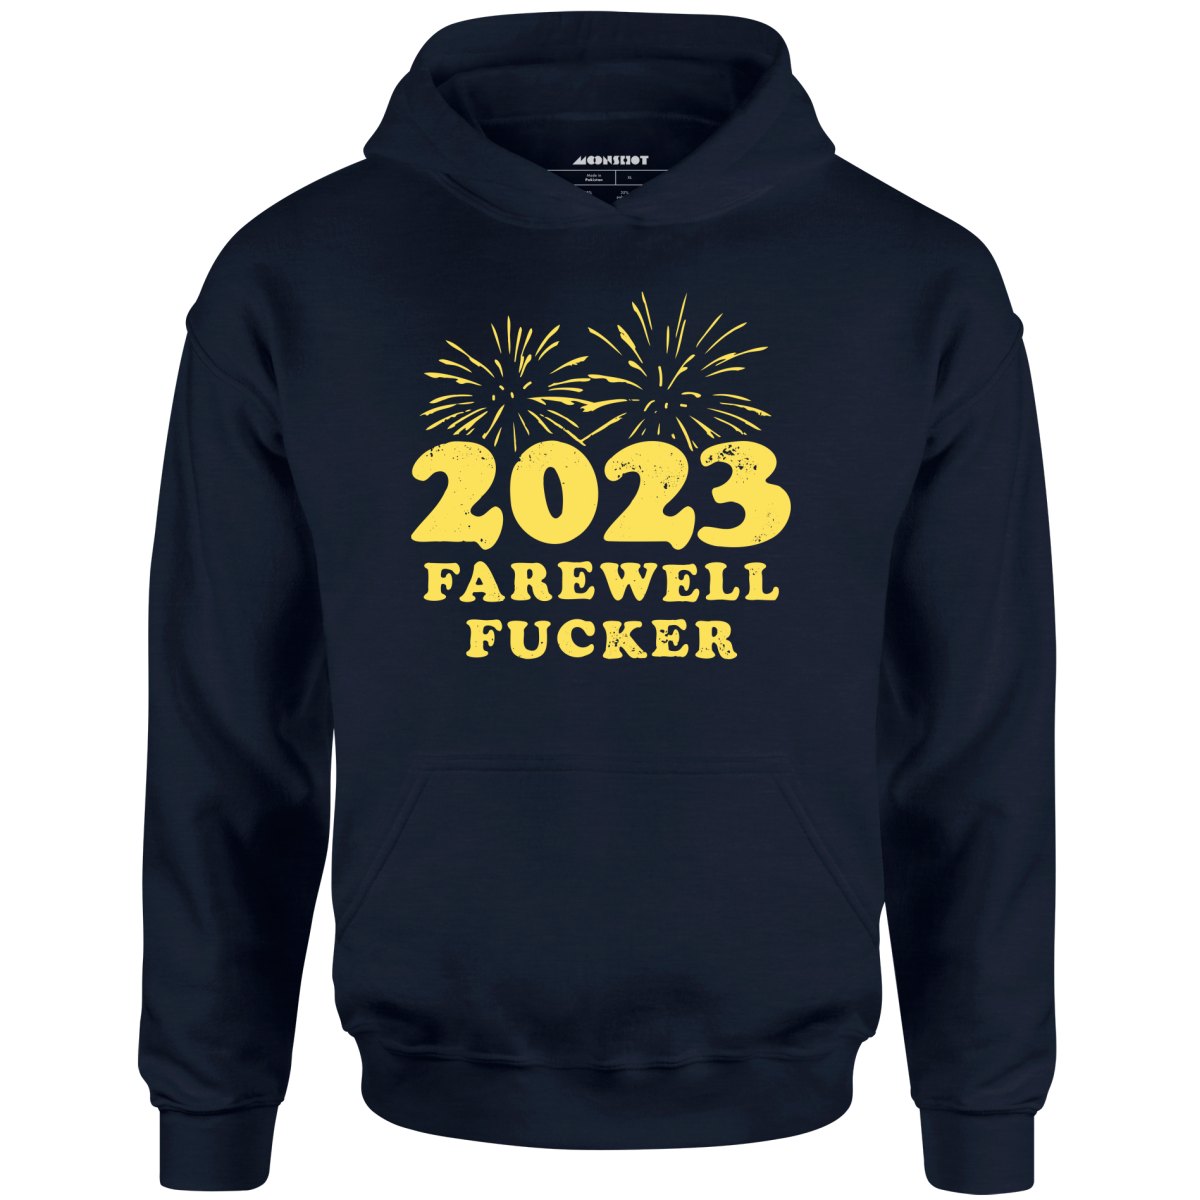 2023 Farewell Fucker - Unisex Hoodie